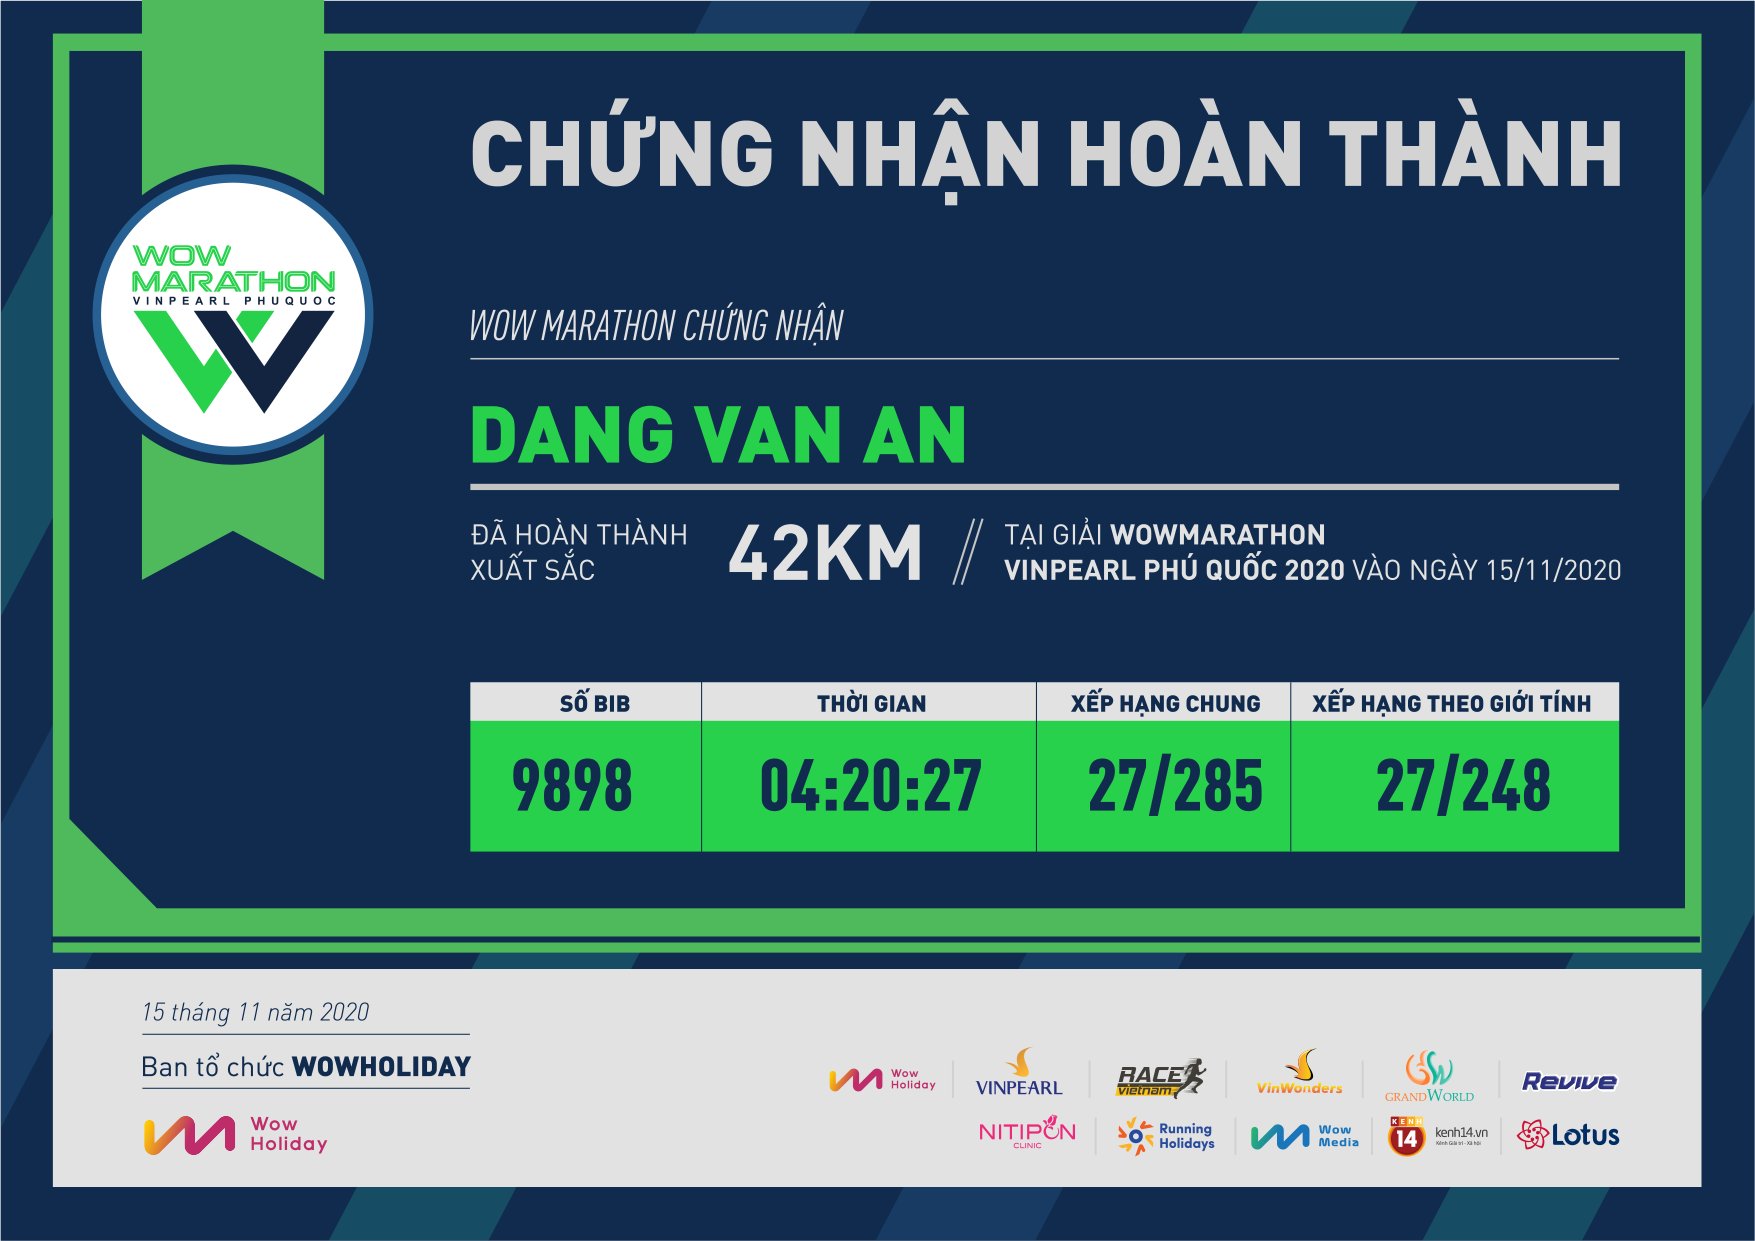 9898 - Dang Van An